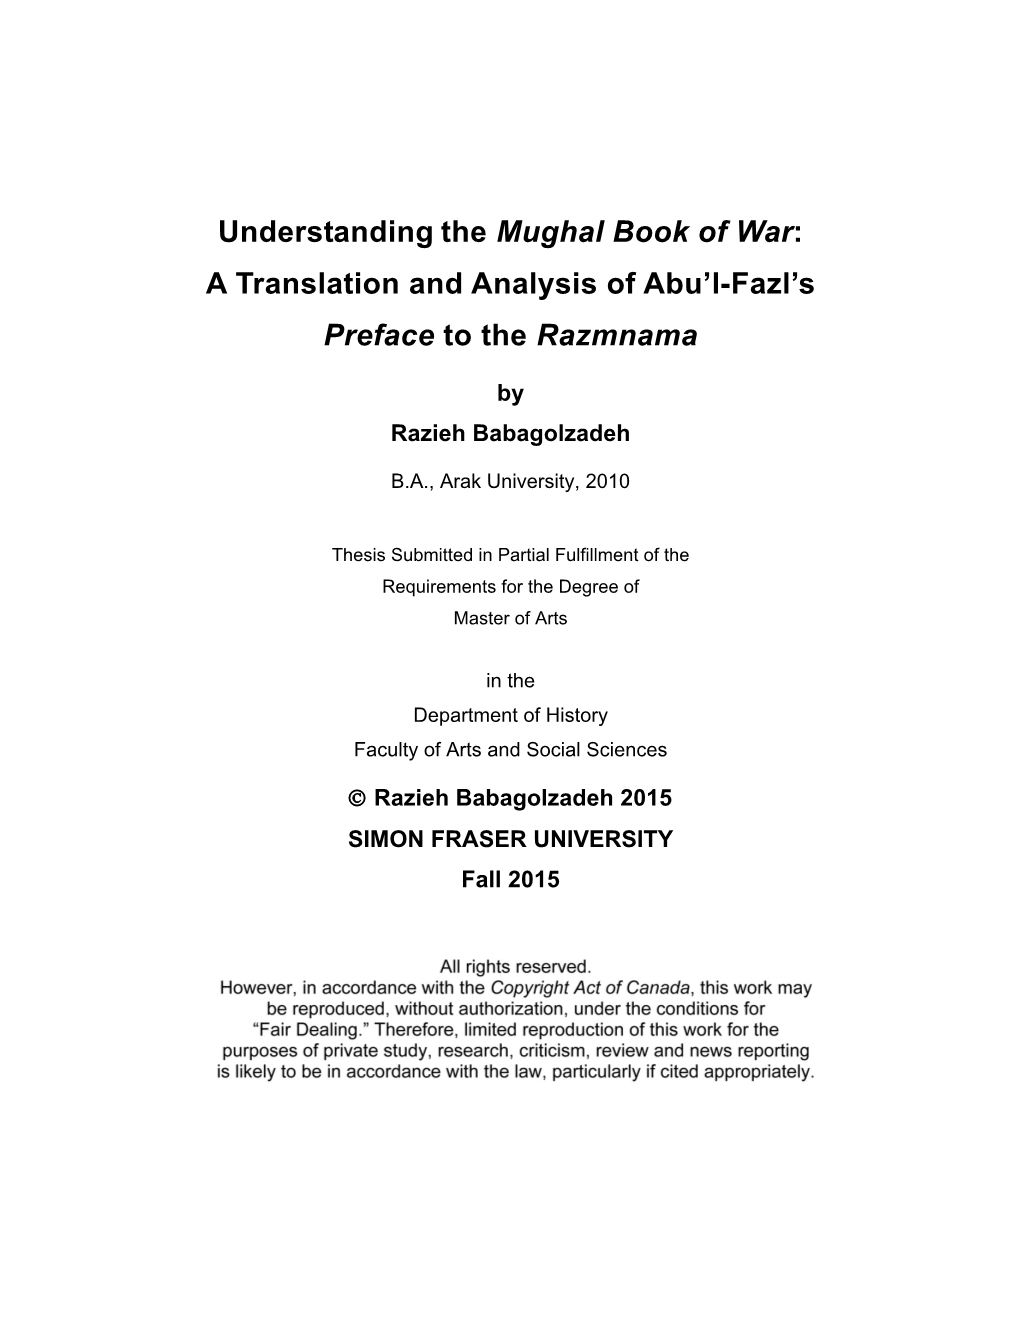 A Translation and Analysis of Abu'l-Fazl's Preface to the Razmnama